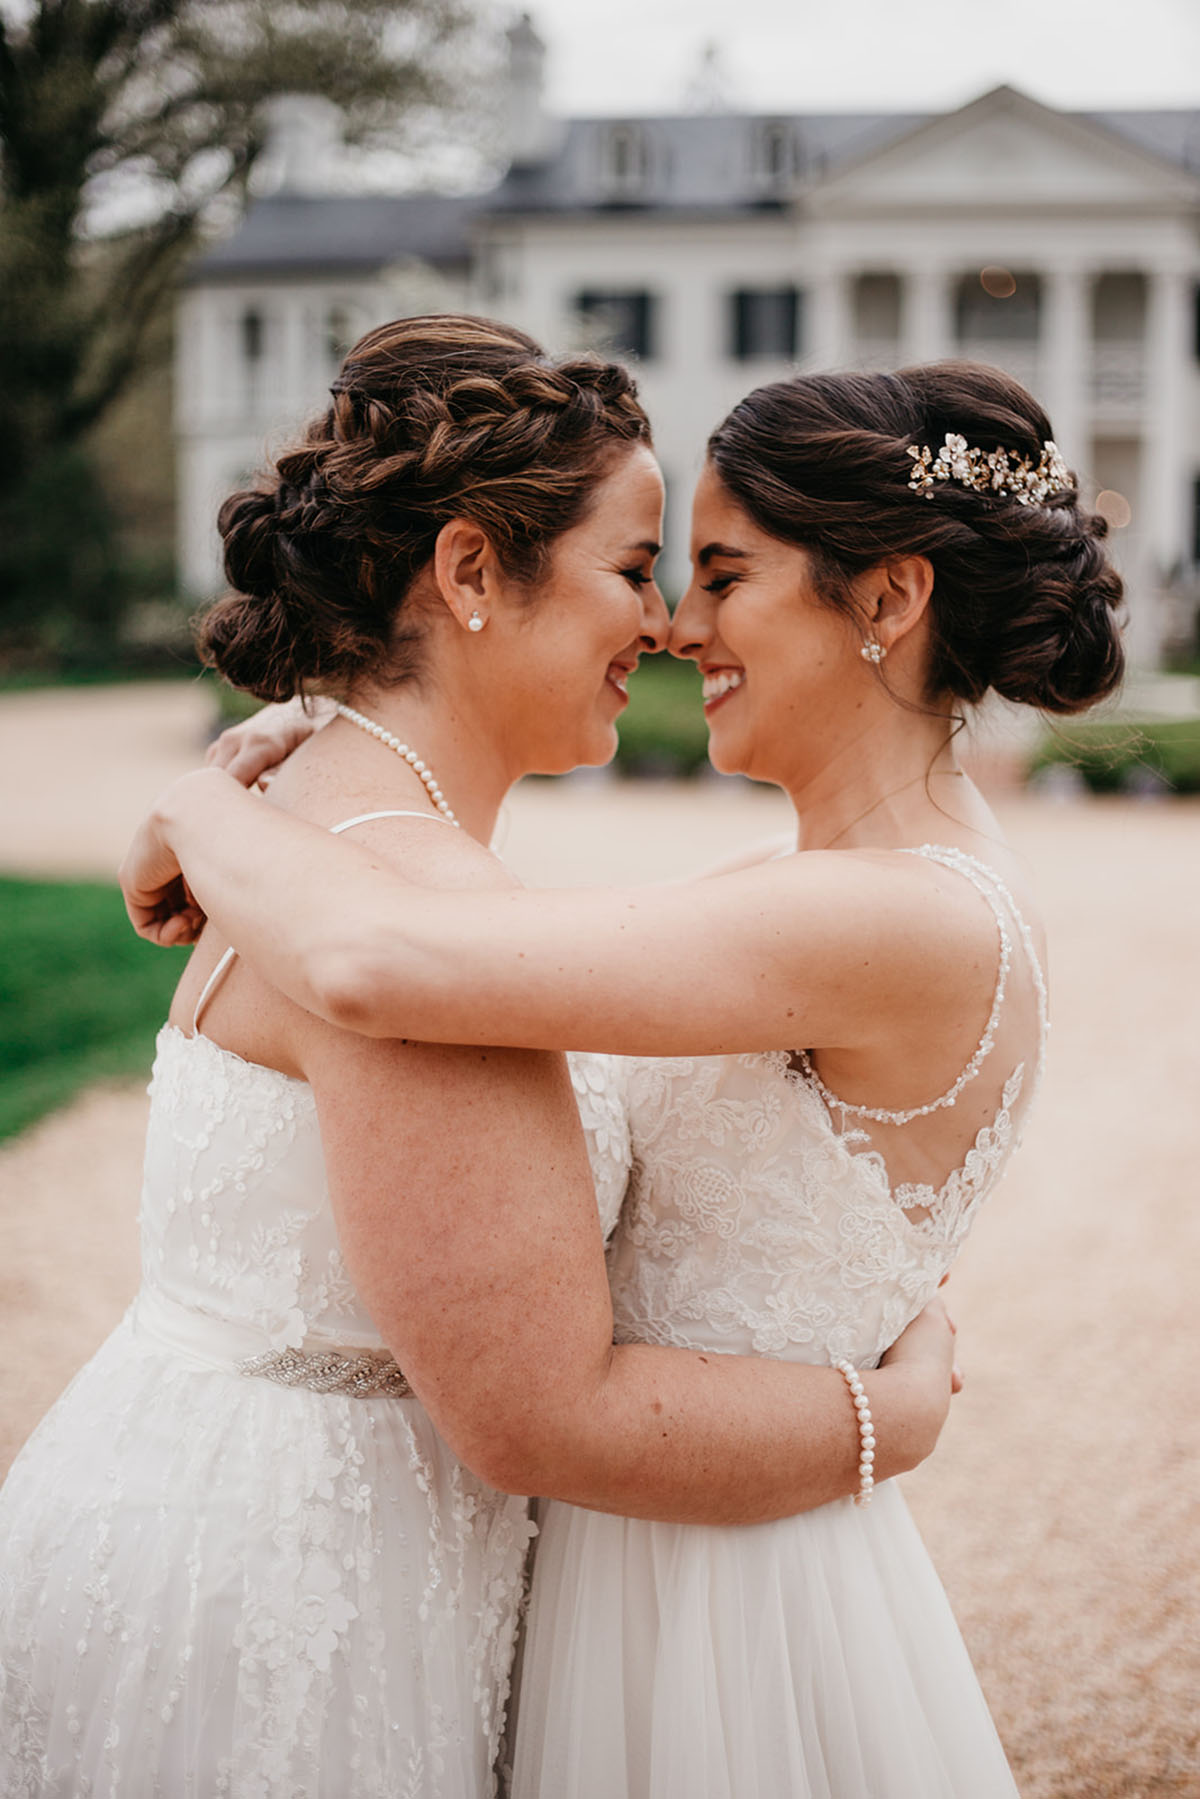 Vintage, romantic vineyard wedding two brides lesbian updos buns white dresses pearls